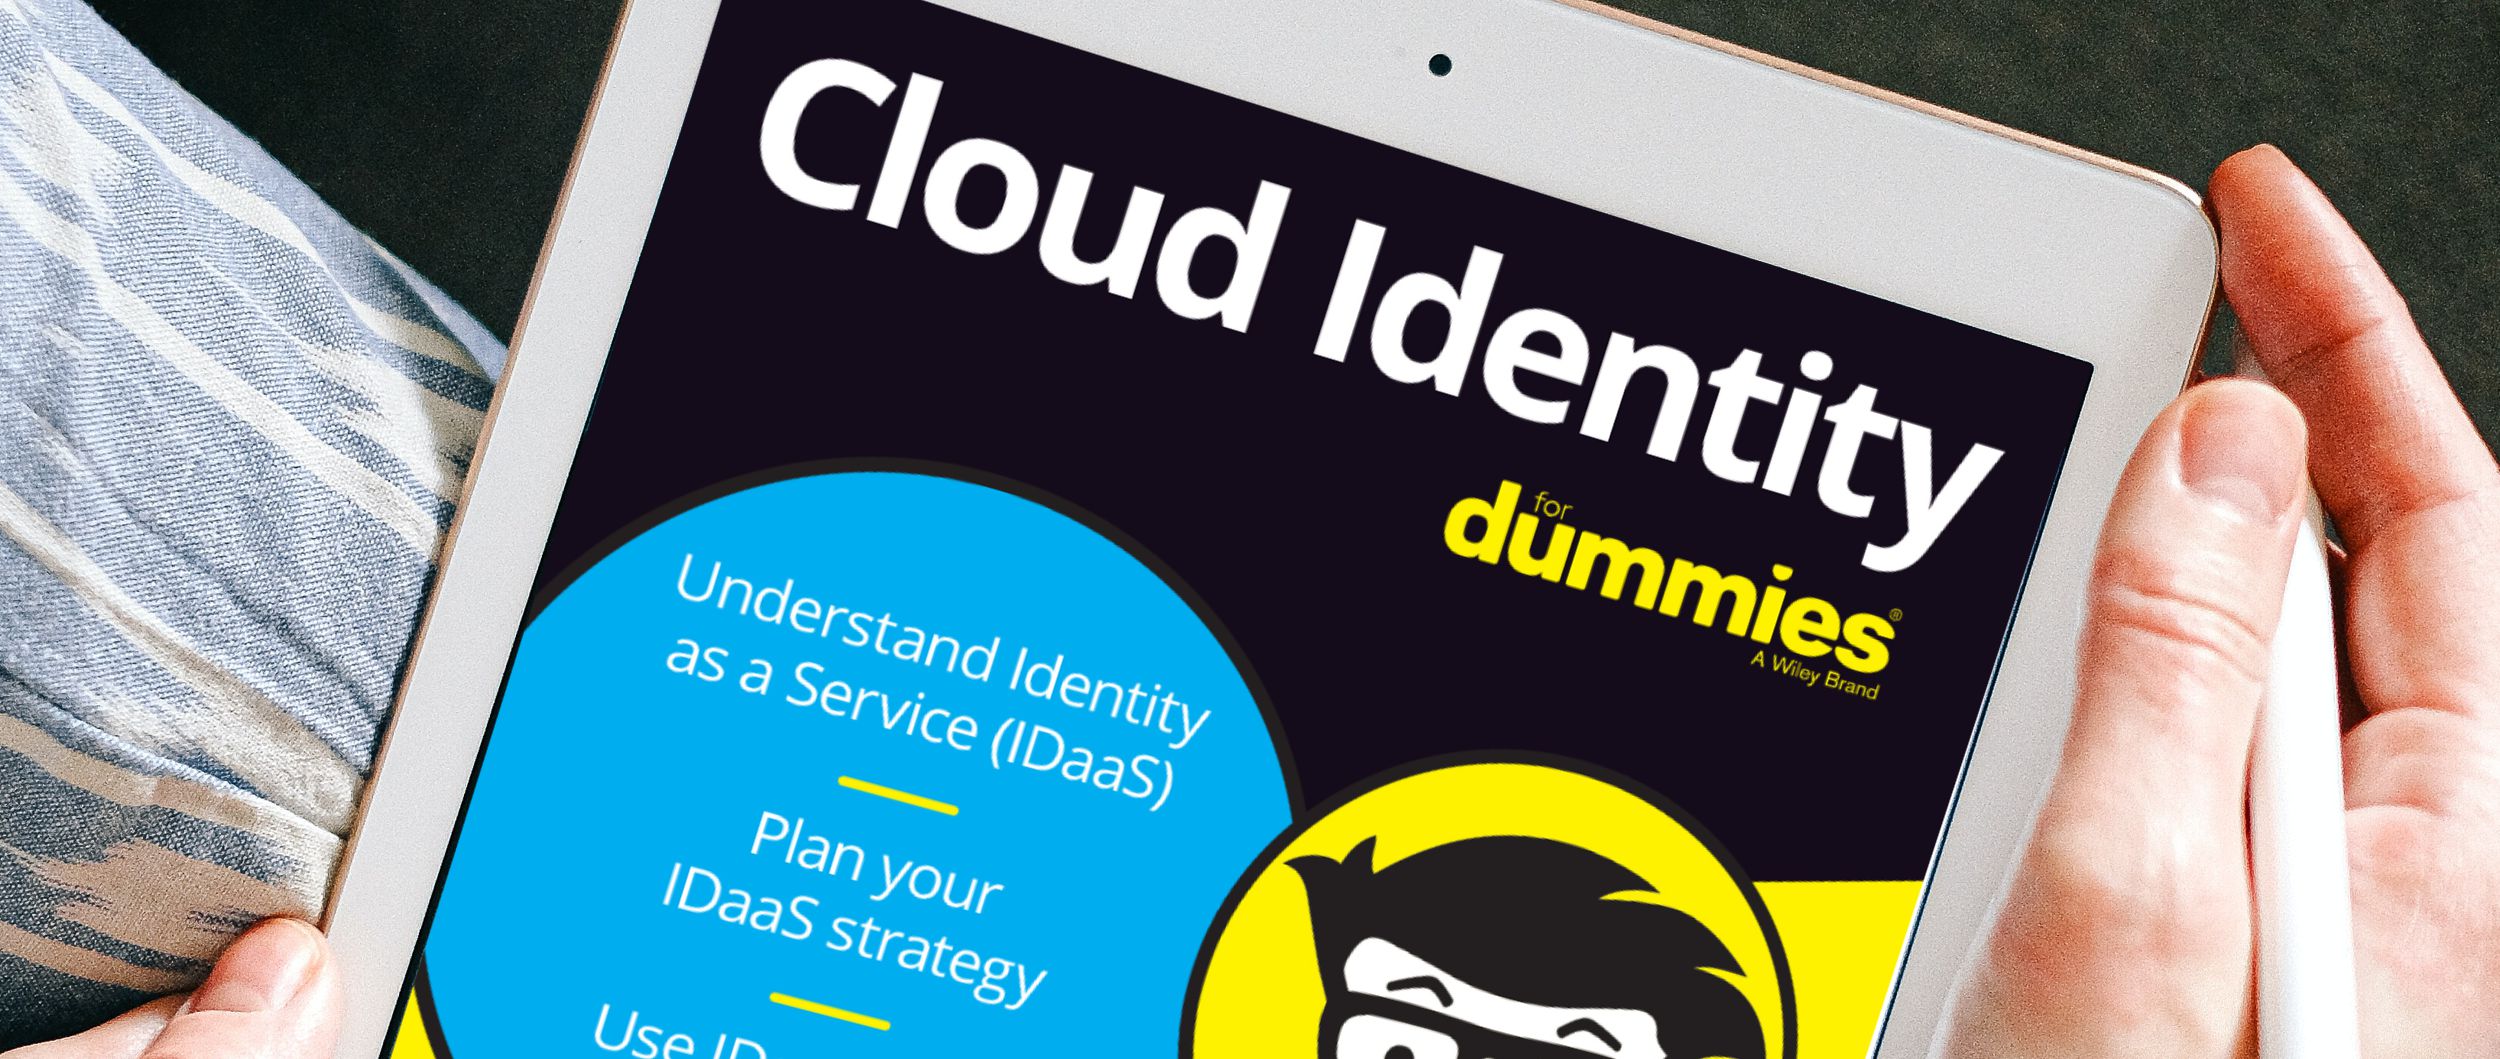 Cloud Identity for Dummies